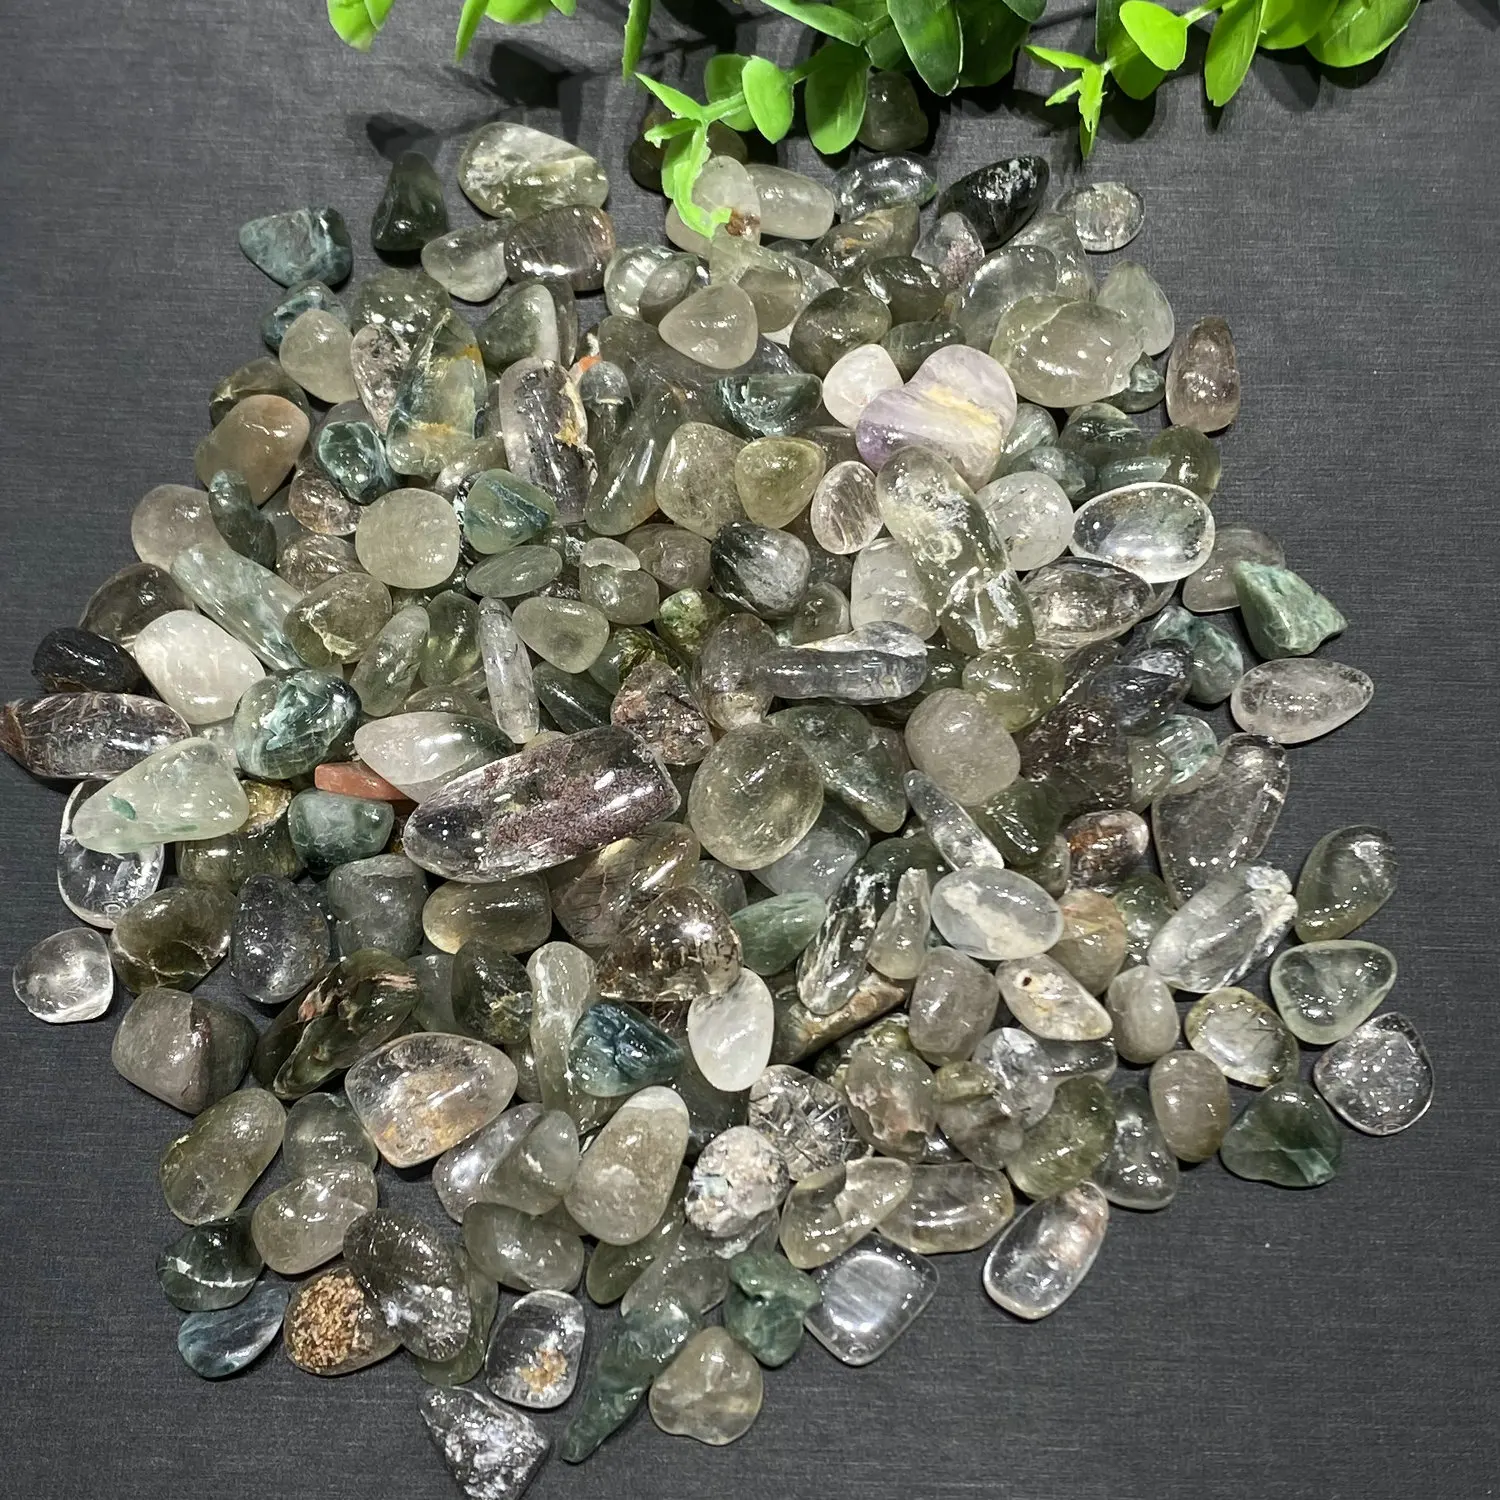 10-20mm 100g Natural Polished Green Rutilated Quartz Crystal Gravel Healing Stones Home Decoration